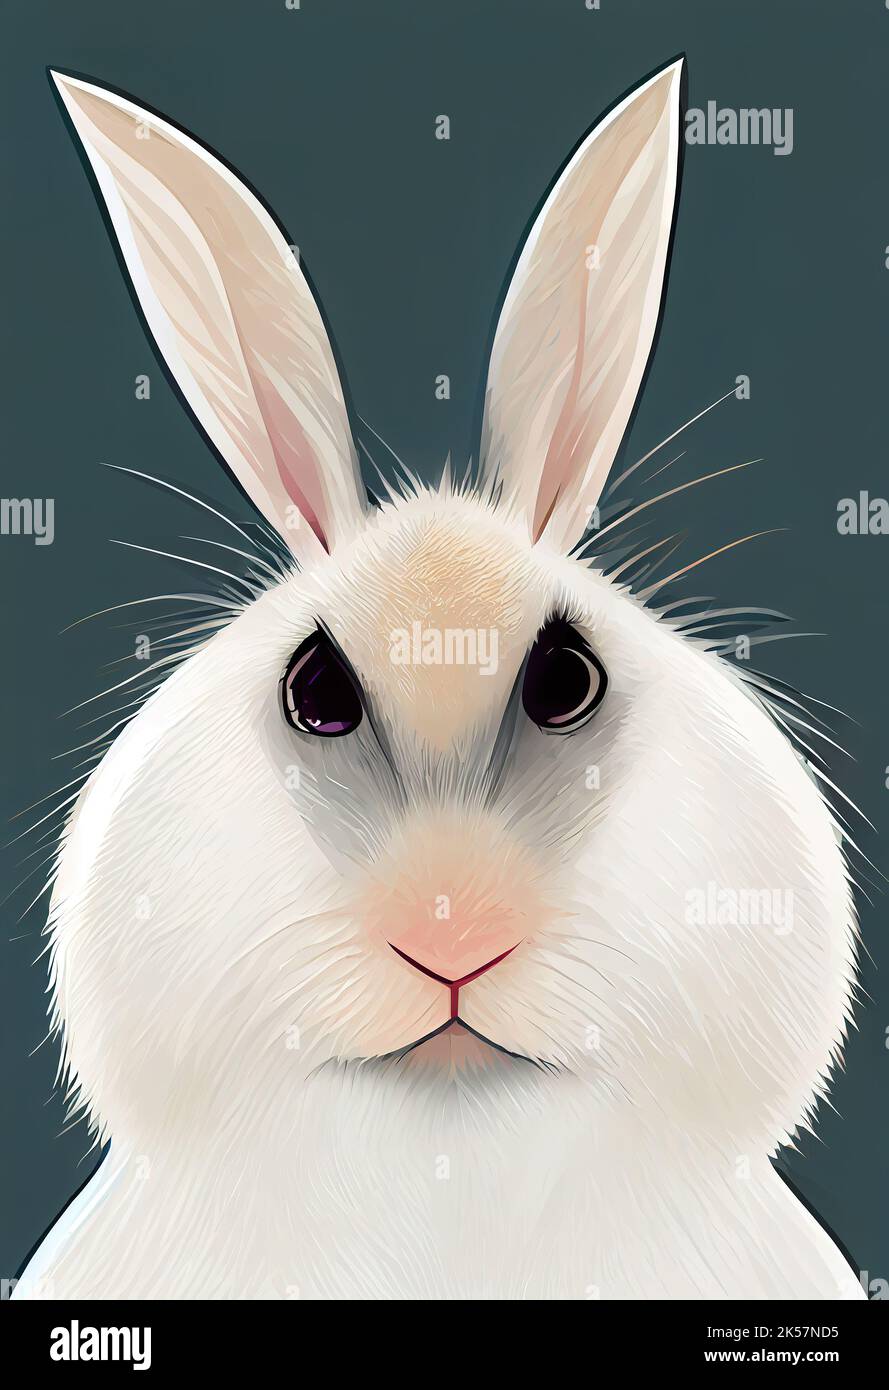 Fairytale cartoon chubby rabbit. Funny cheeky white rabbit. Digital illustration. Stock Photo